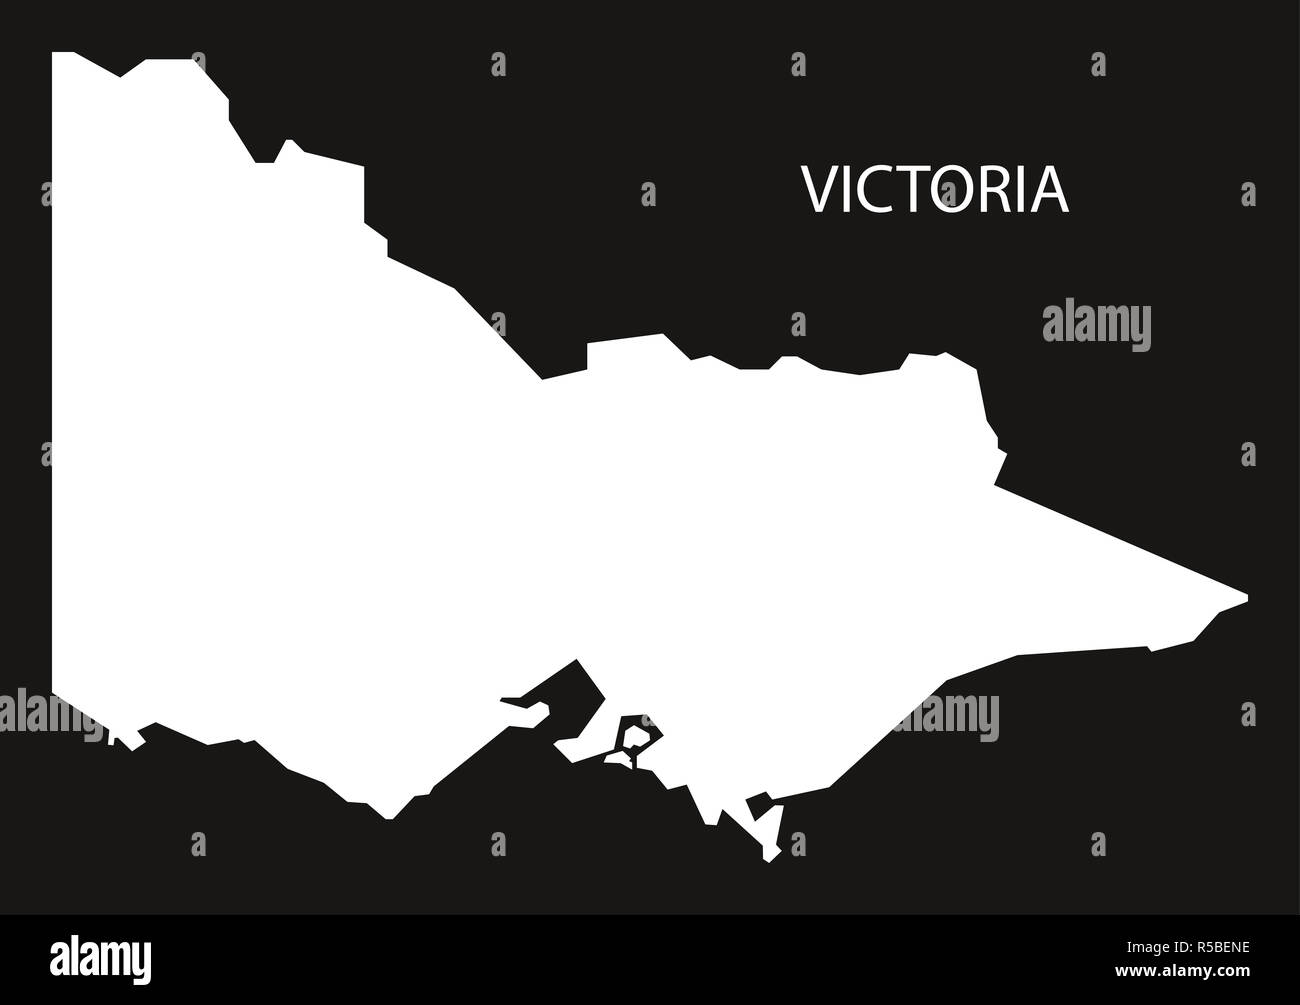 Victoria Australia map black inverted silhouette illustration Stock Photo